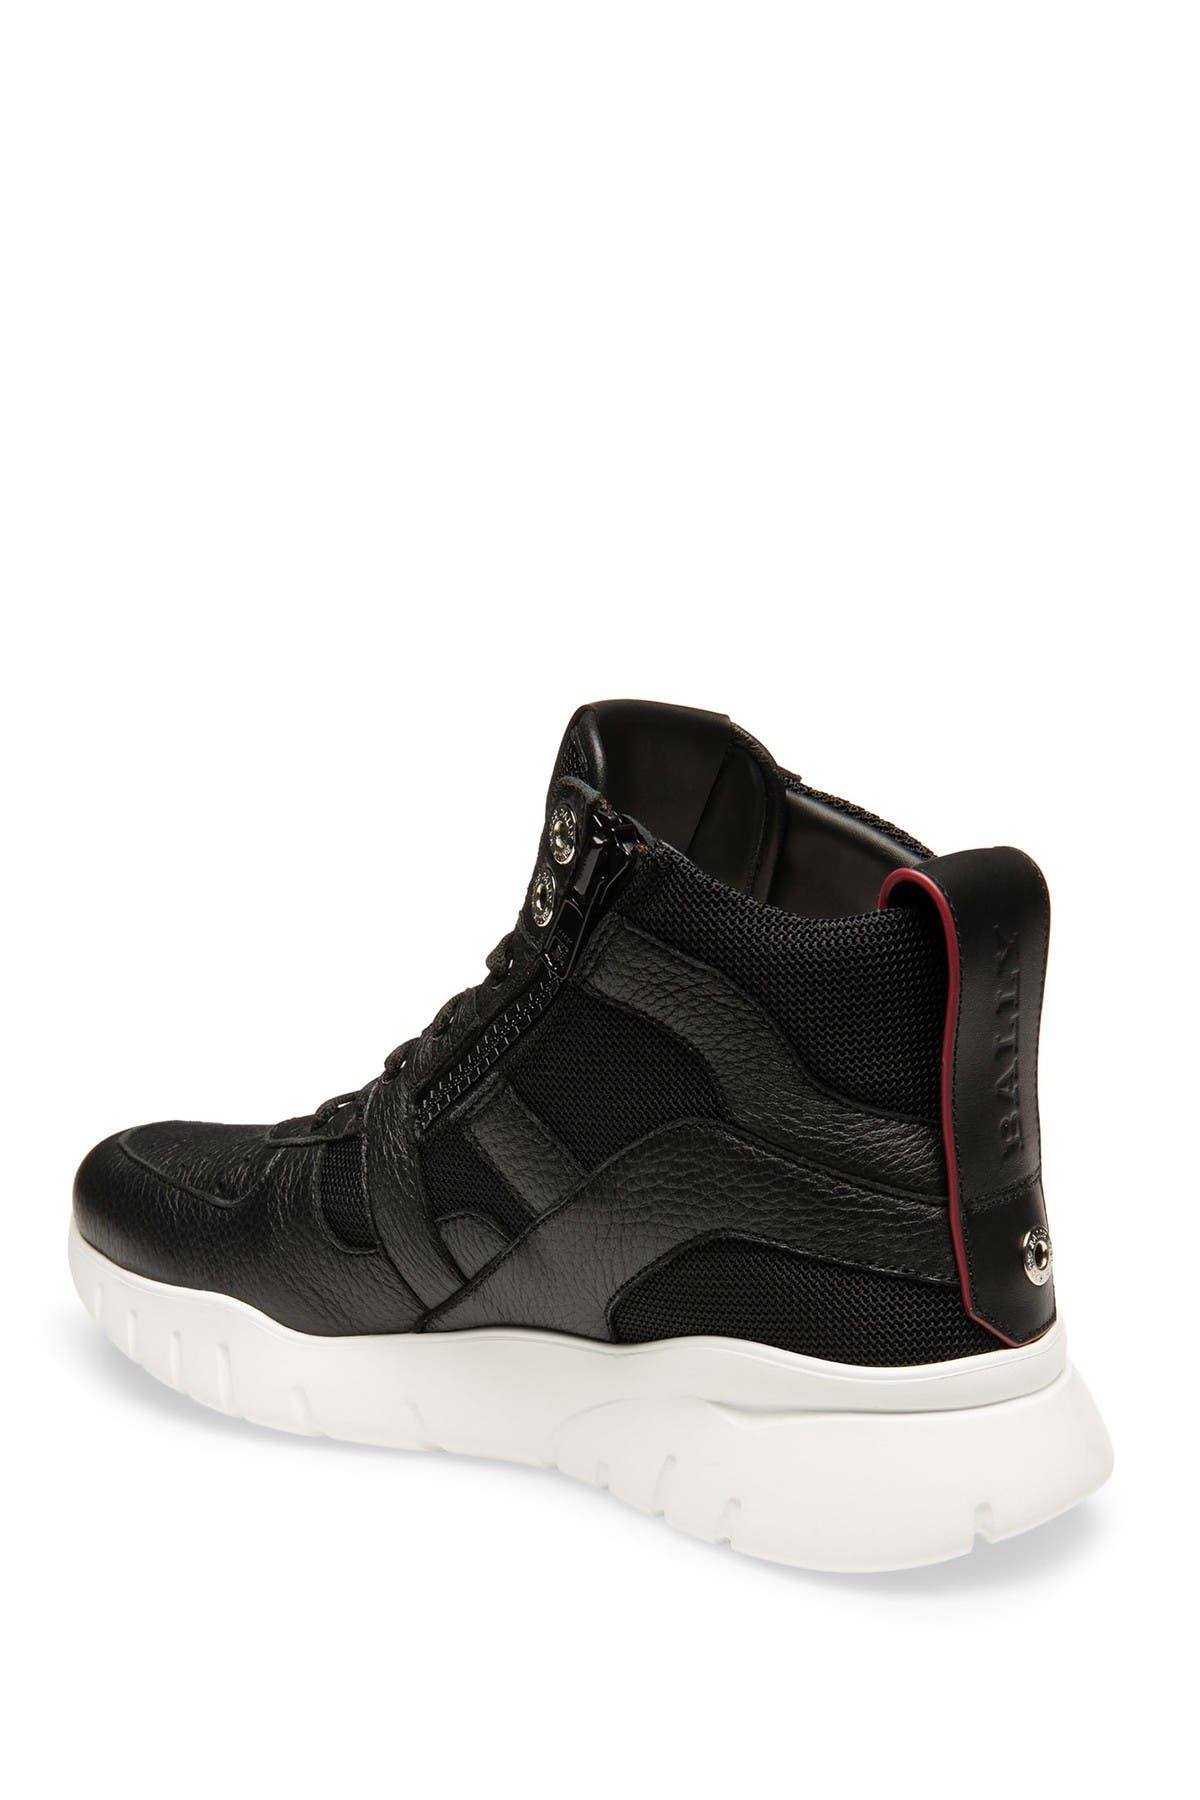 BALLY | Birko Leather High Top Sneaker 